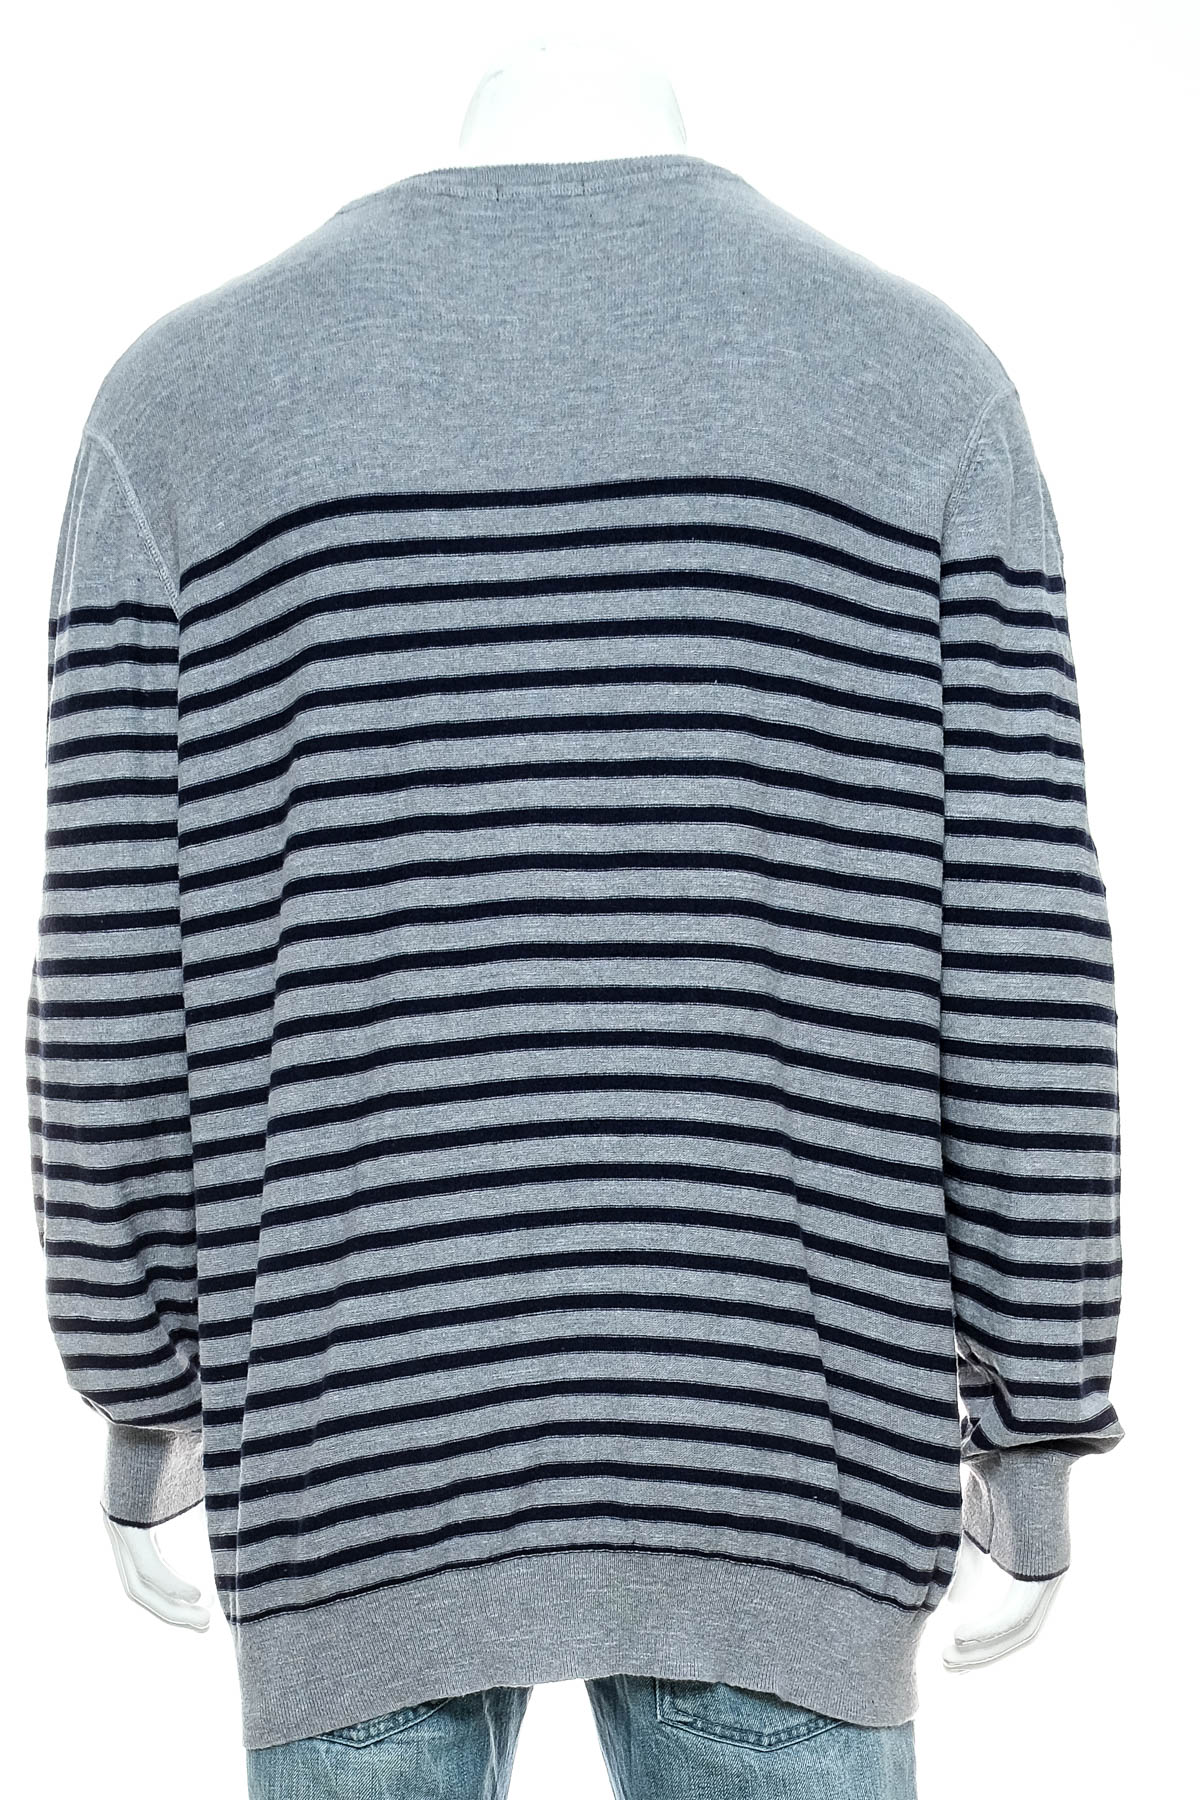 Men's sweater - Timberland - 1